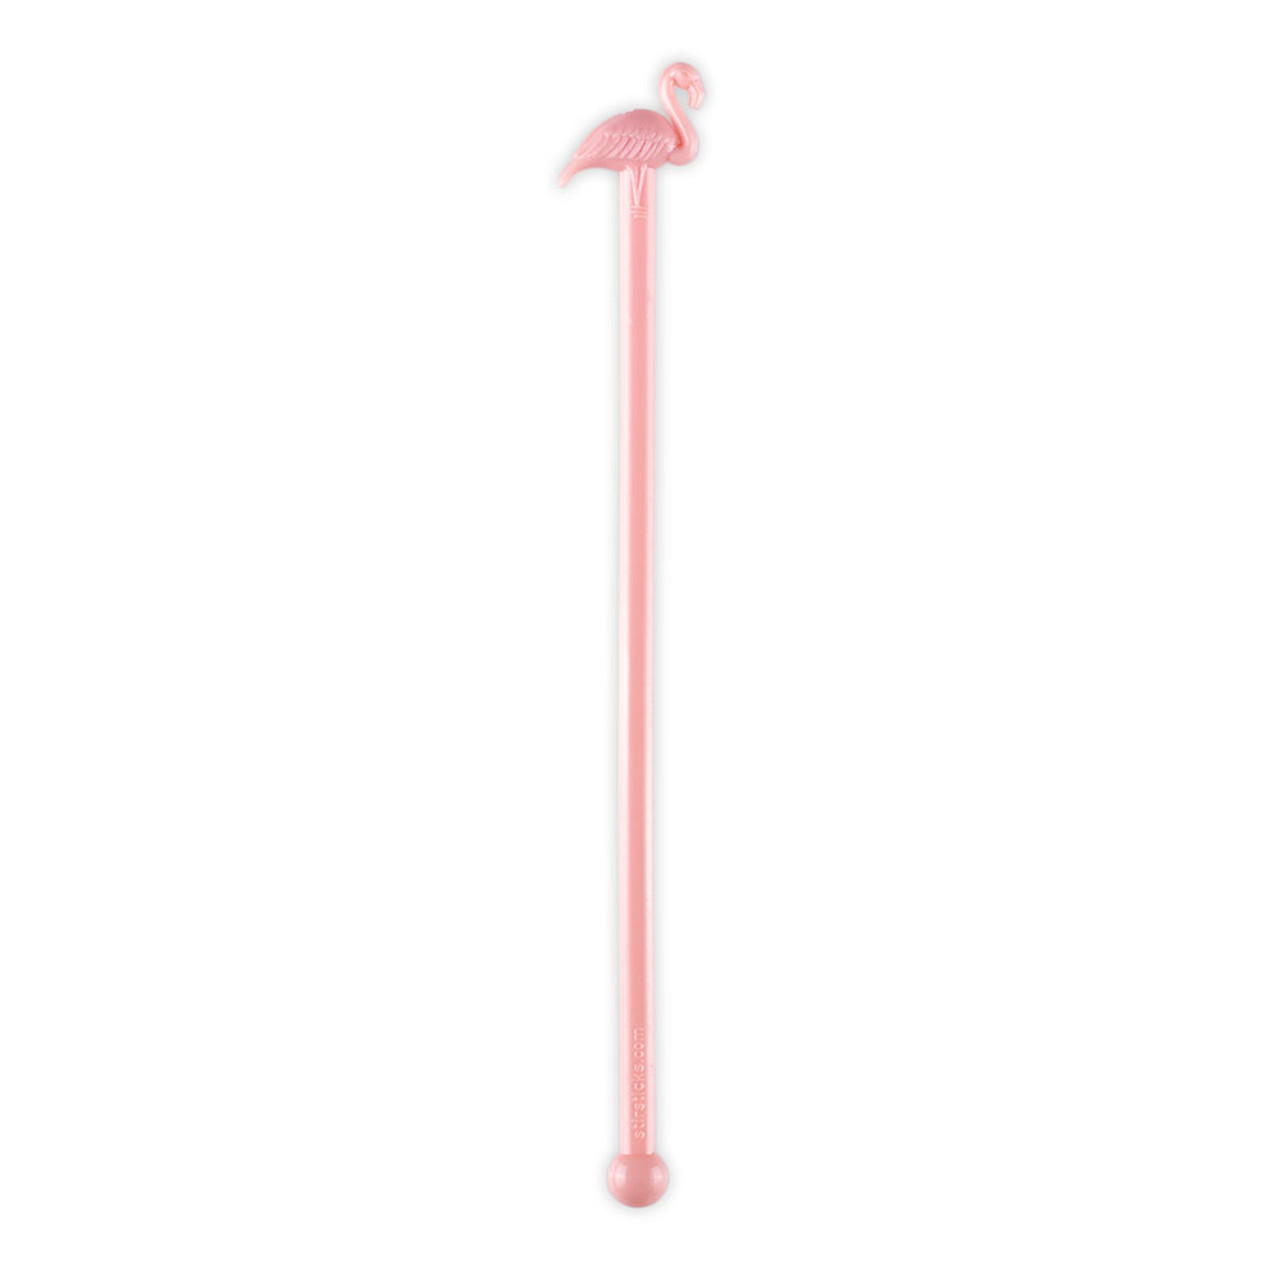 Pink Flamingo Cocktail Stirrers - Set of 24